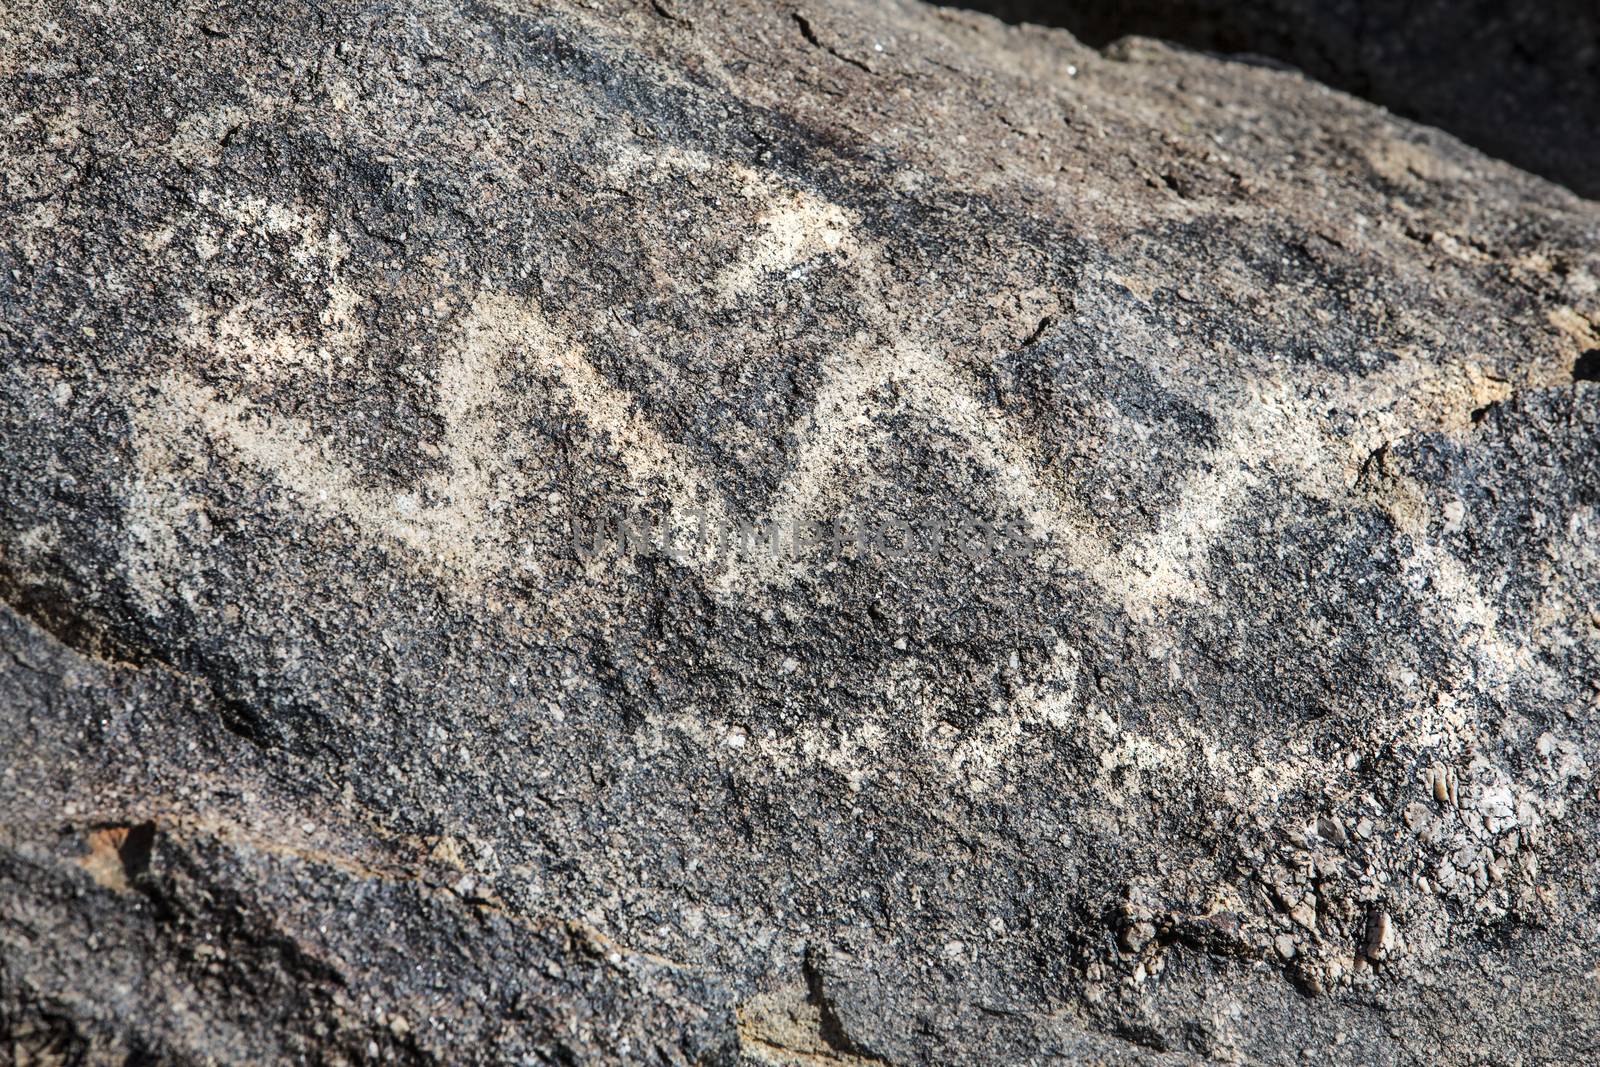 Native American Petroglyph in canyon near Chloride Arizona